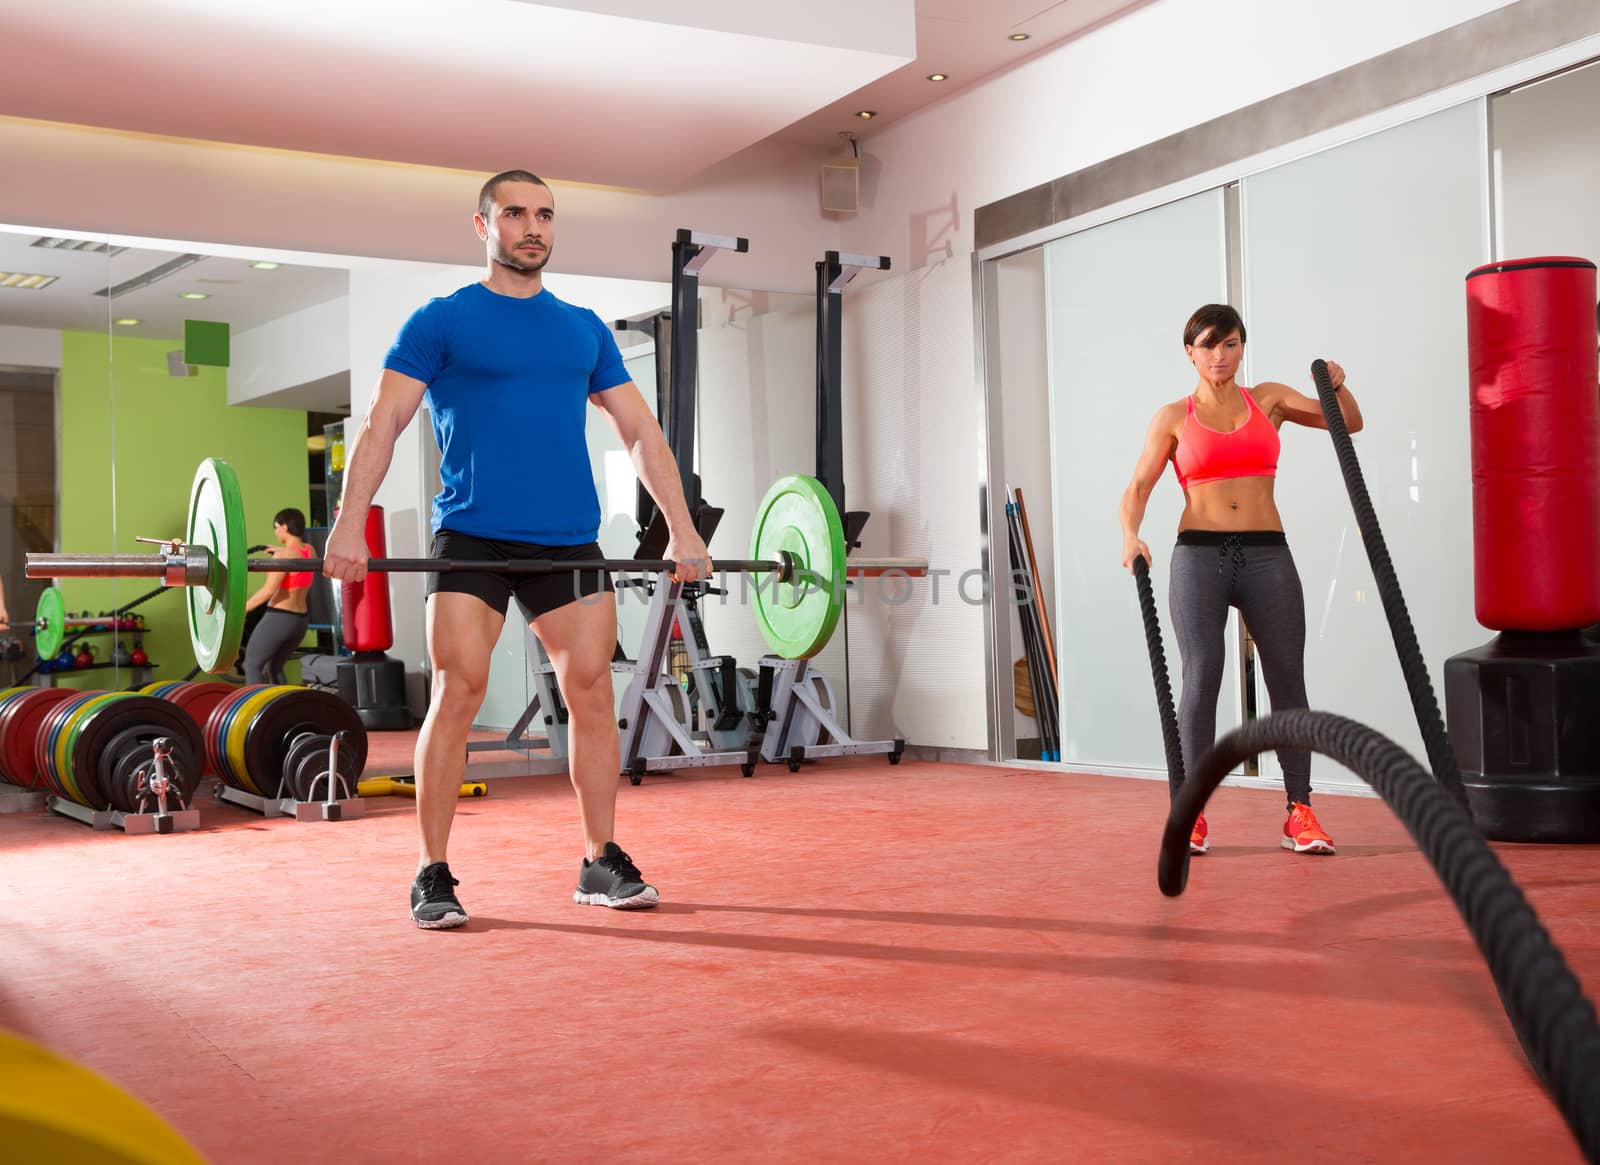 Crossfit gym weight lifting bar man woman battling ropes by lunamarina